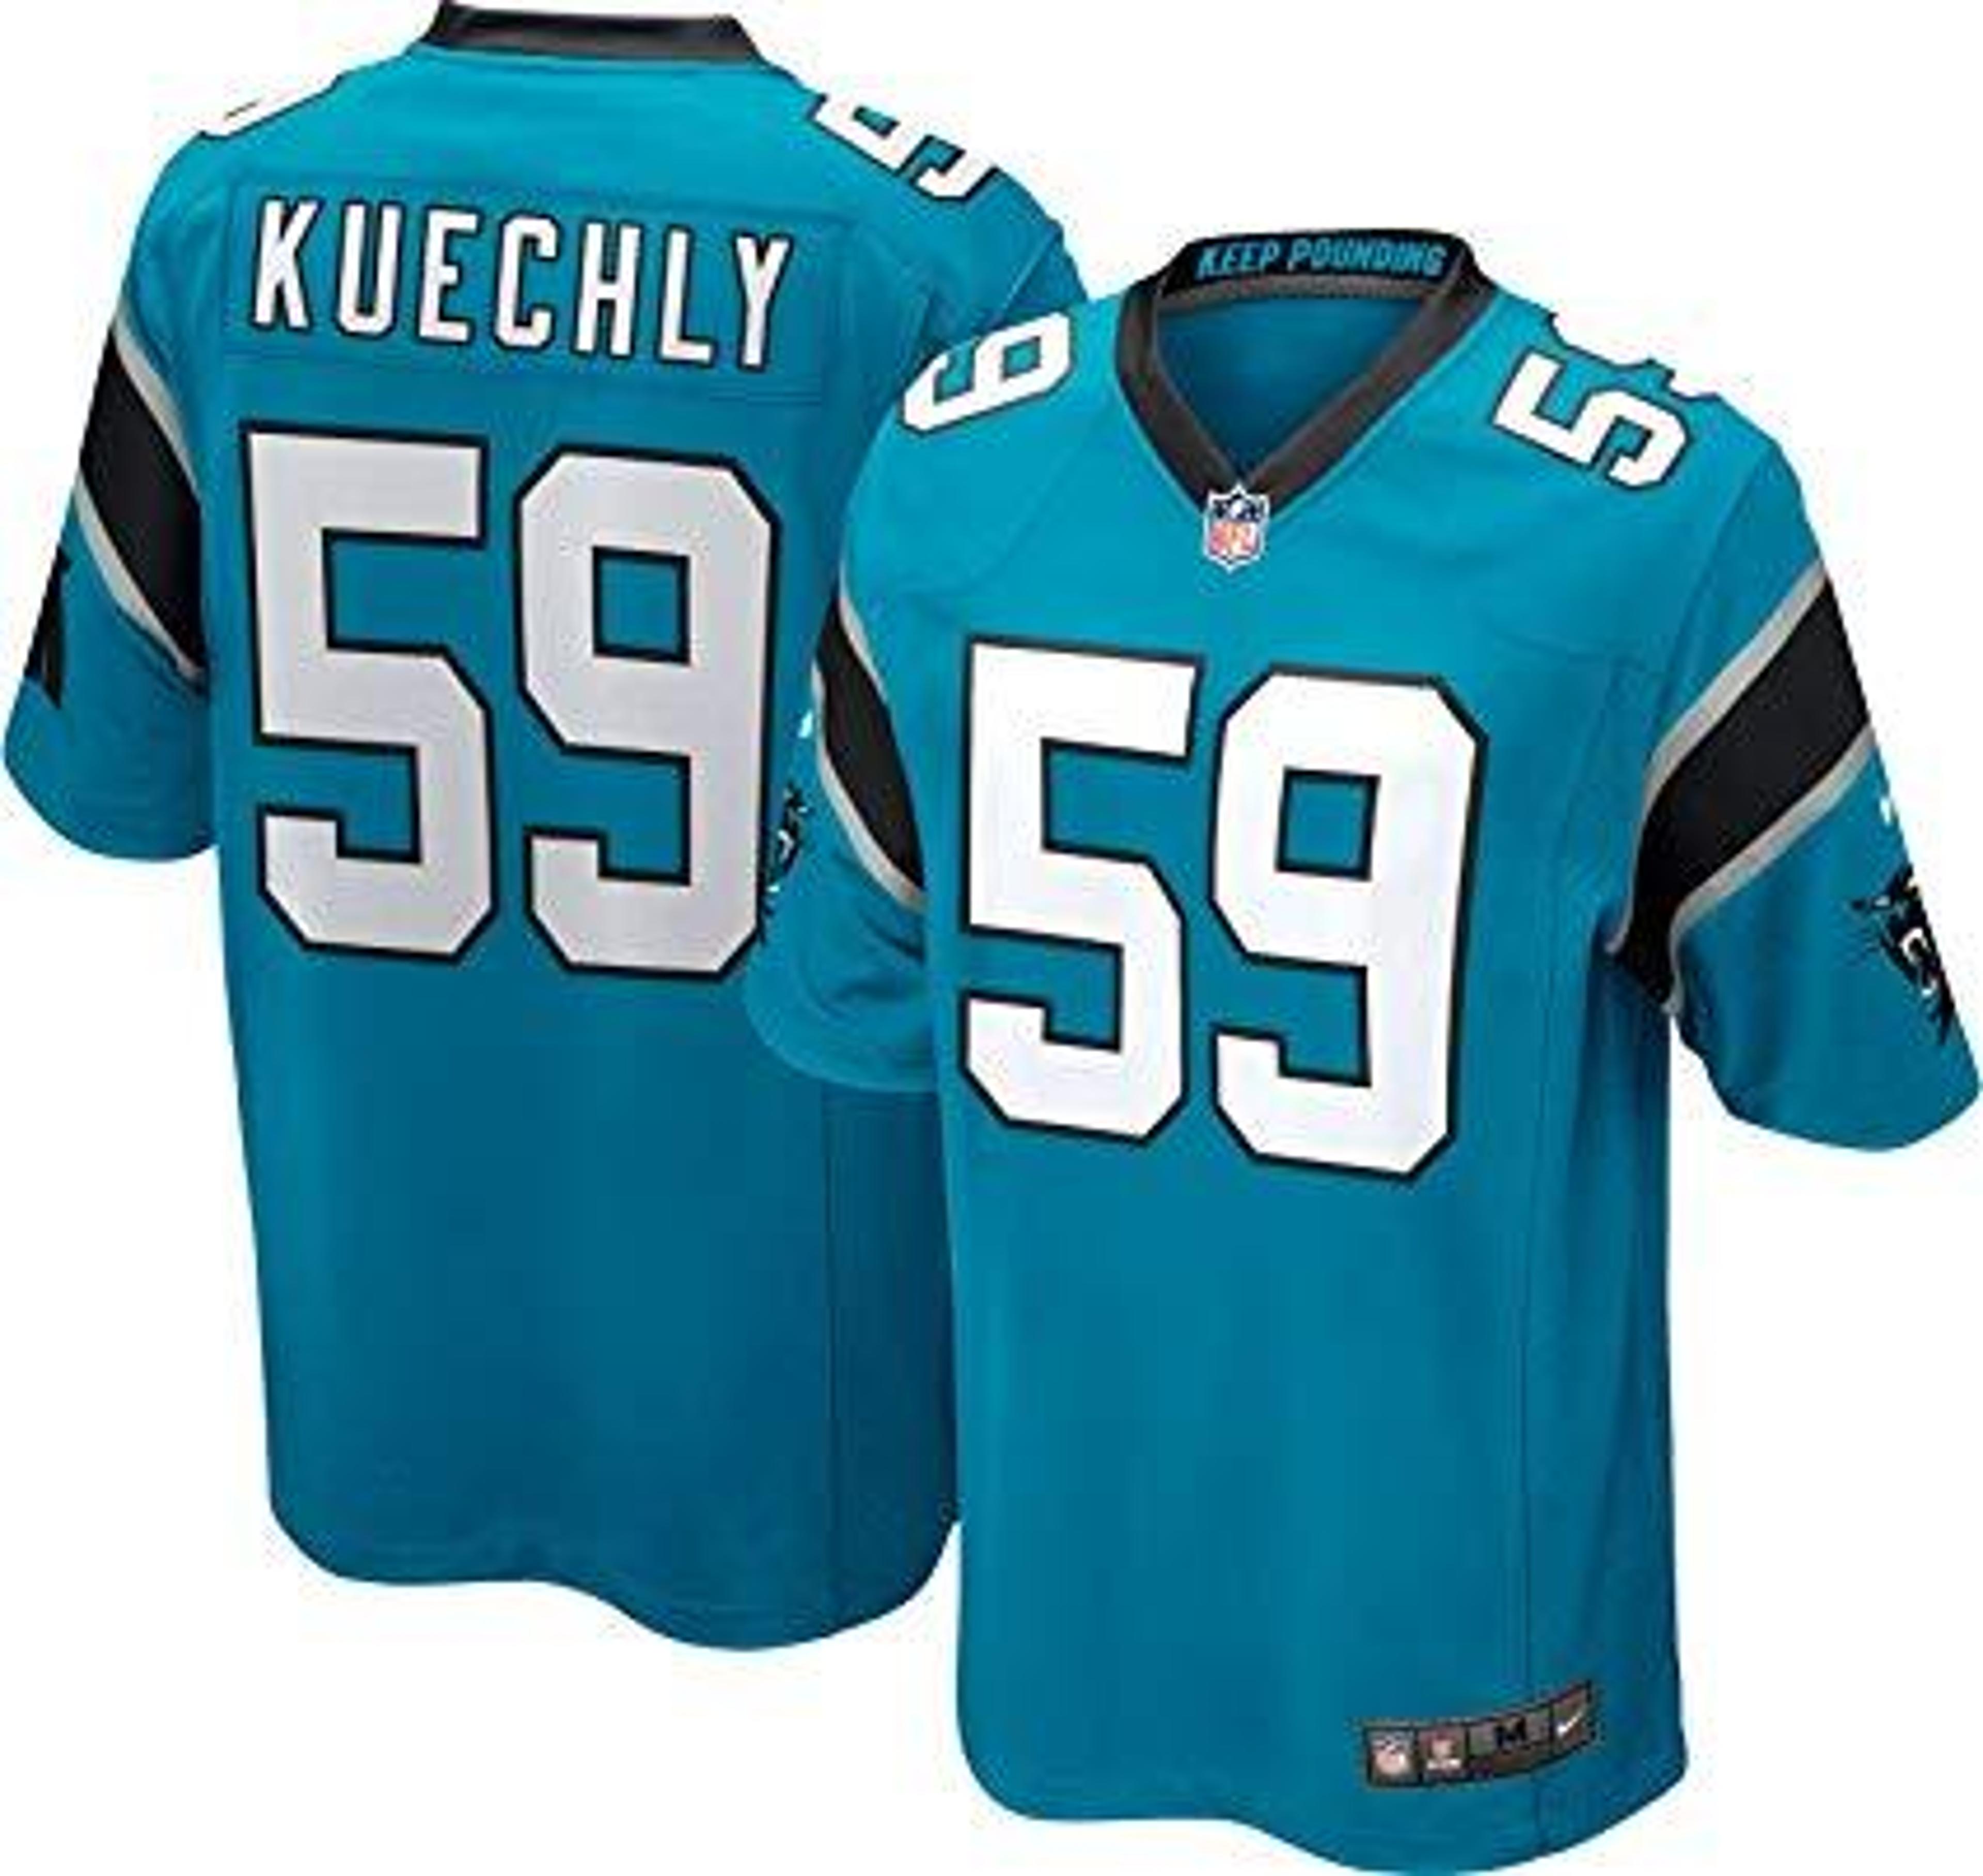 Nike NFL Luke Kuechly Carolina Panthers Jersey